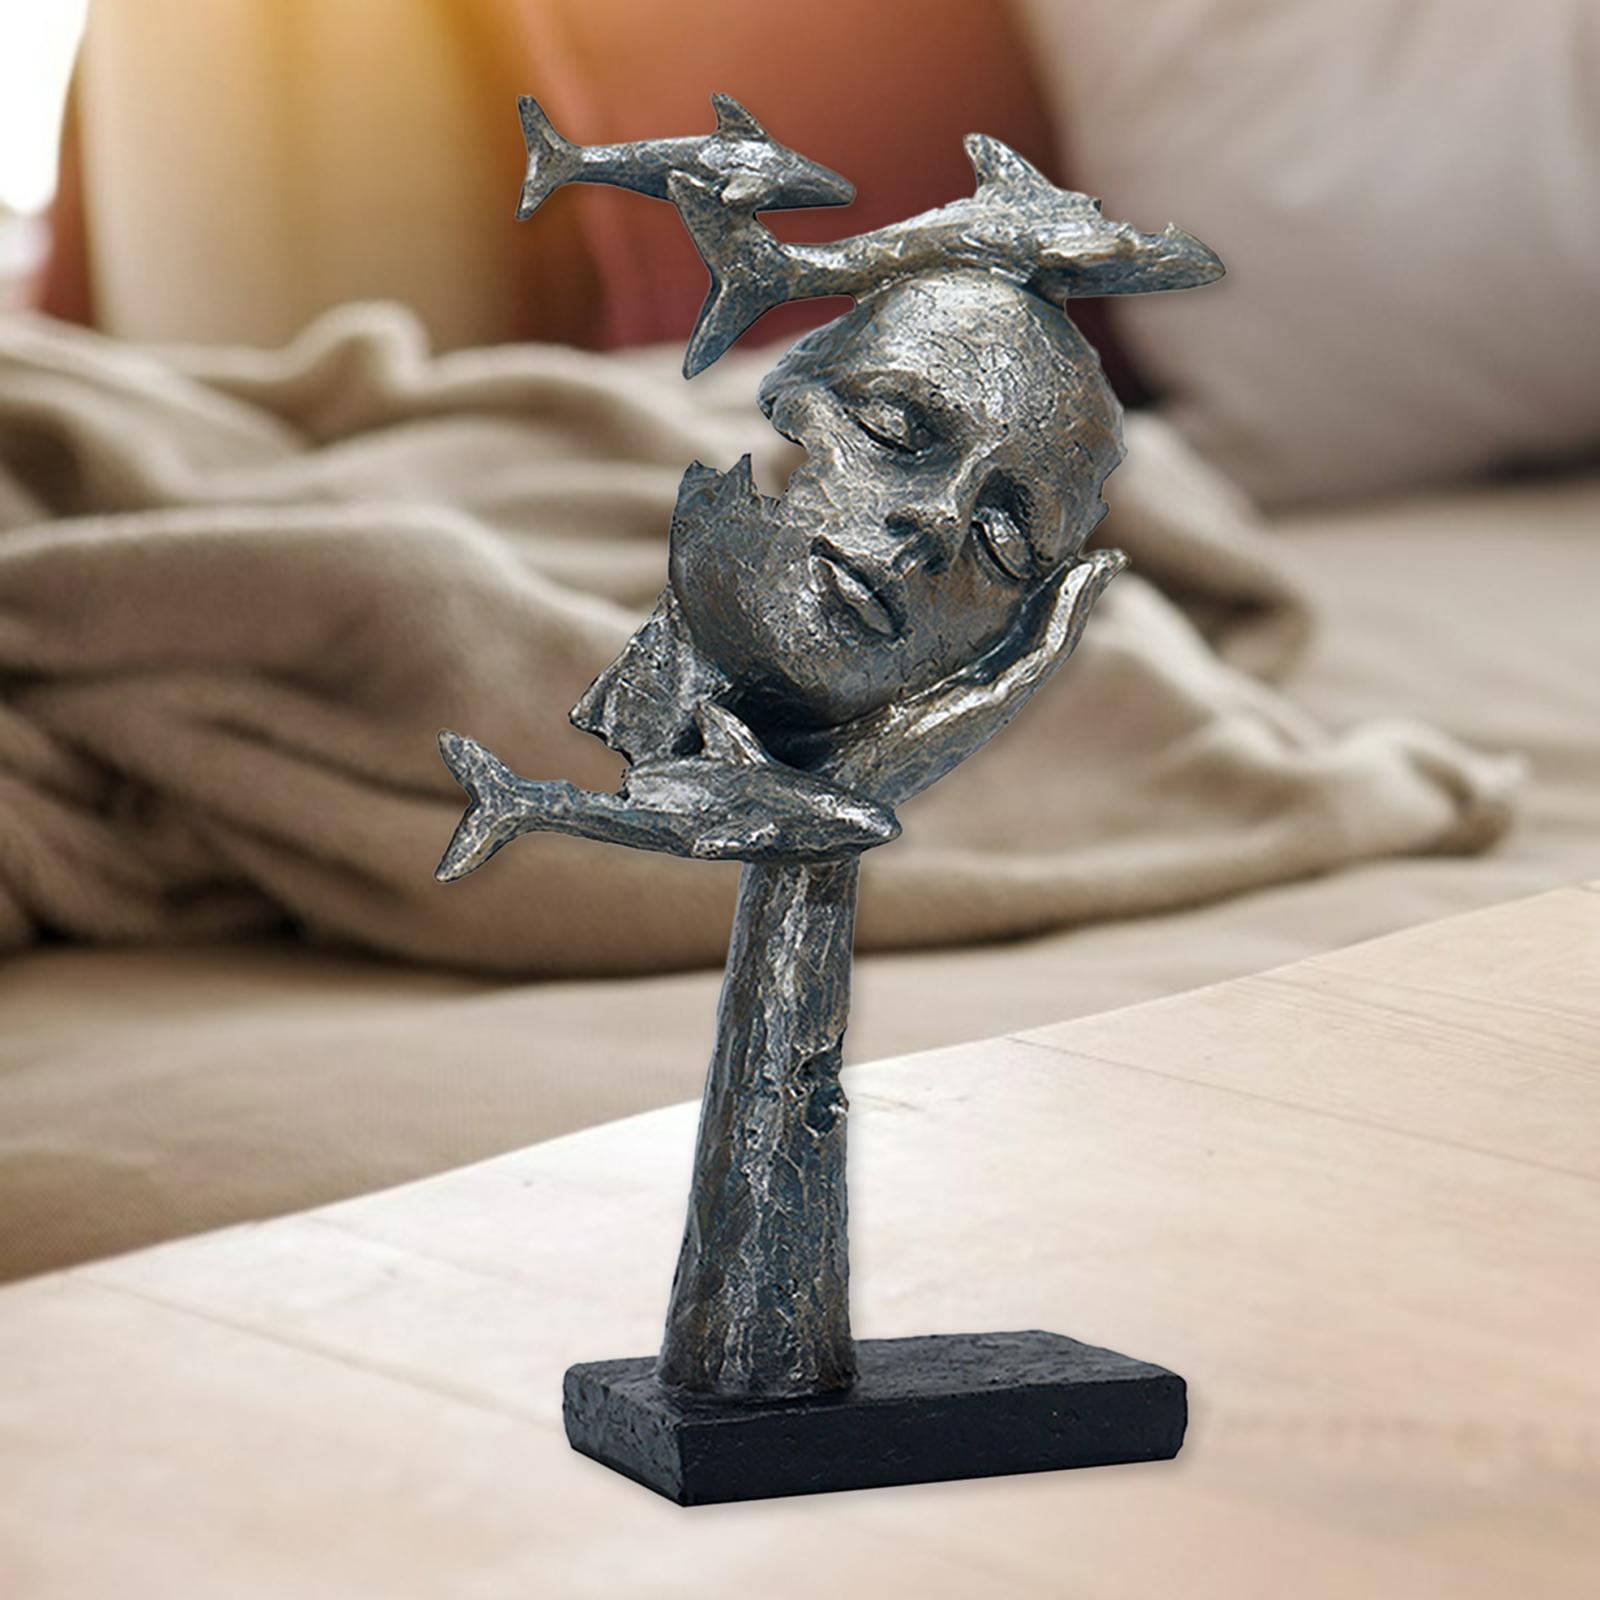 Modern Art Thinker Sculpture Statue Figurine Ornament for Home Desktop Decor